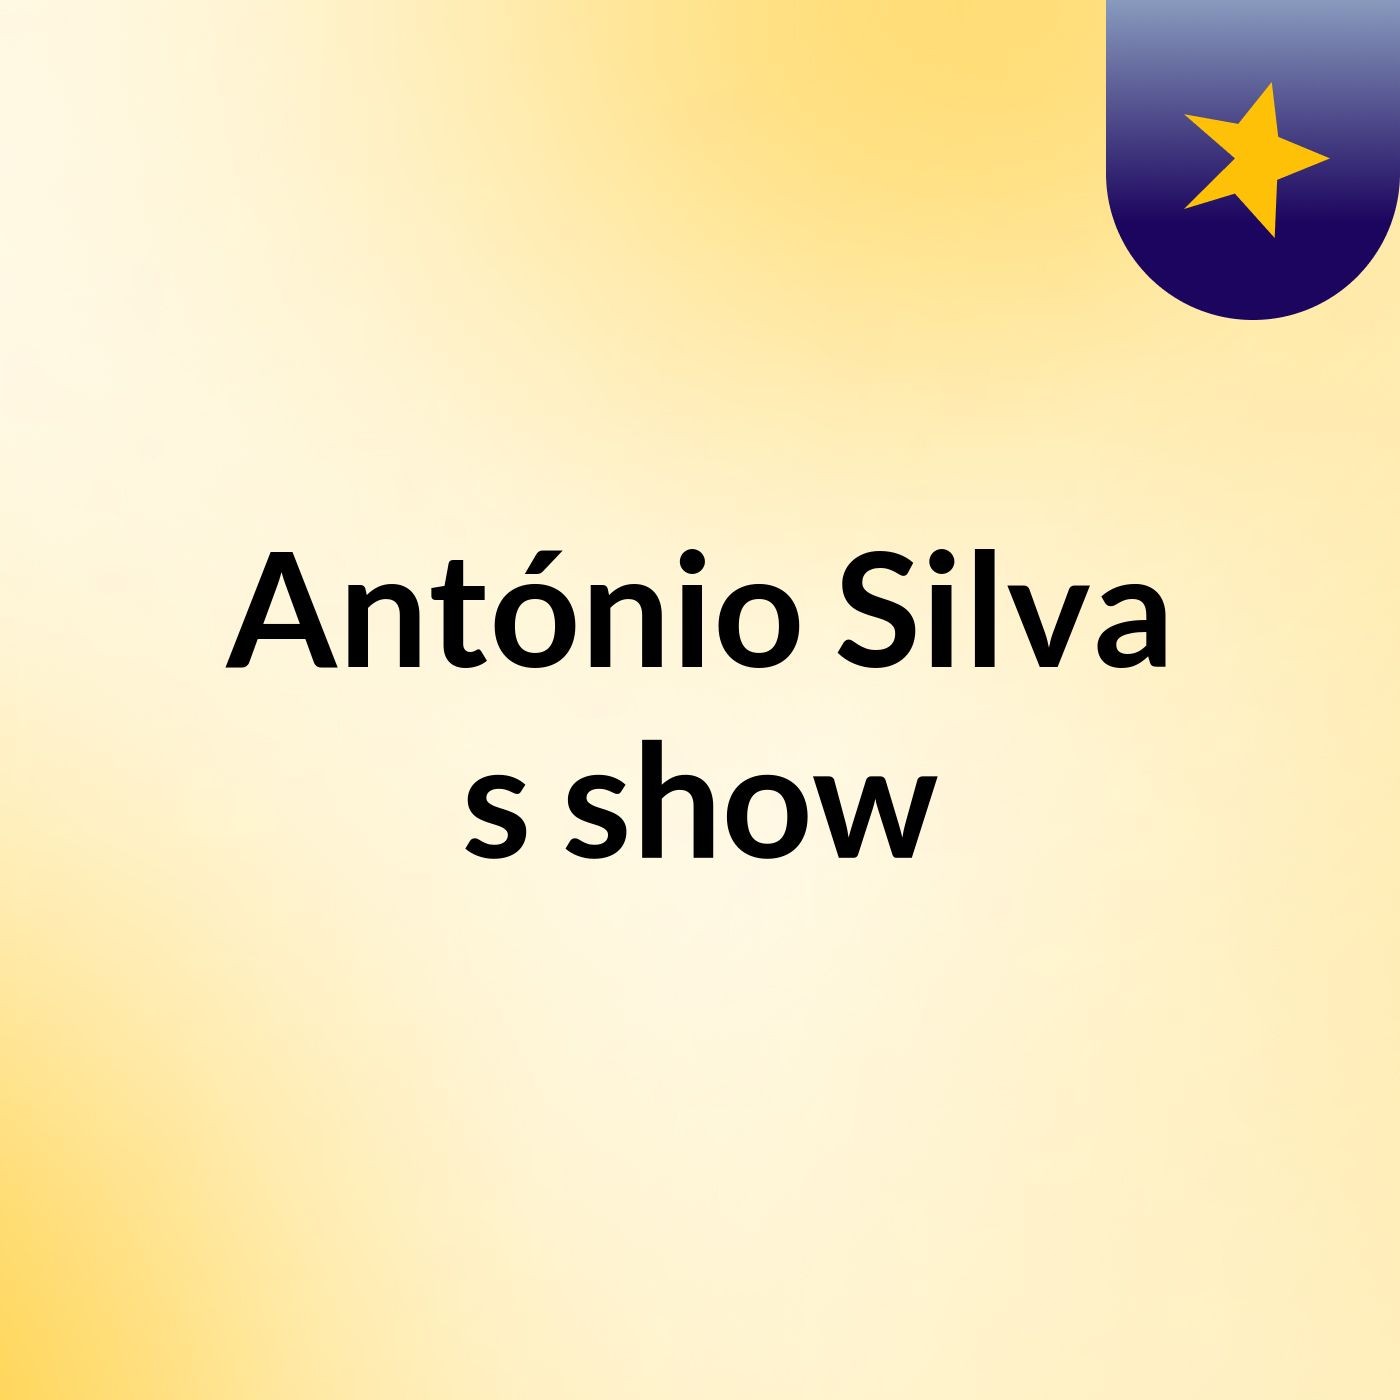 António Silva's show